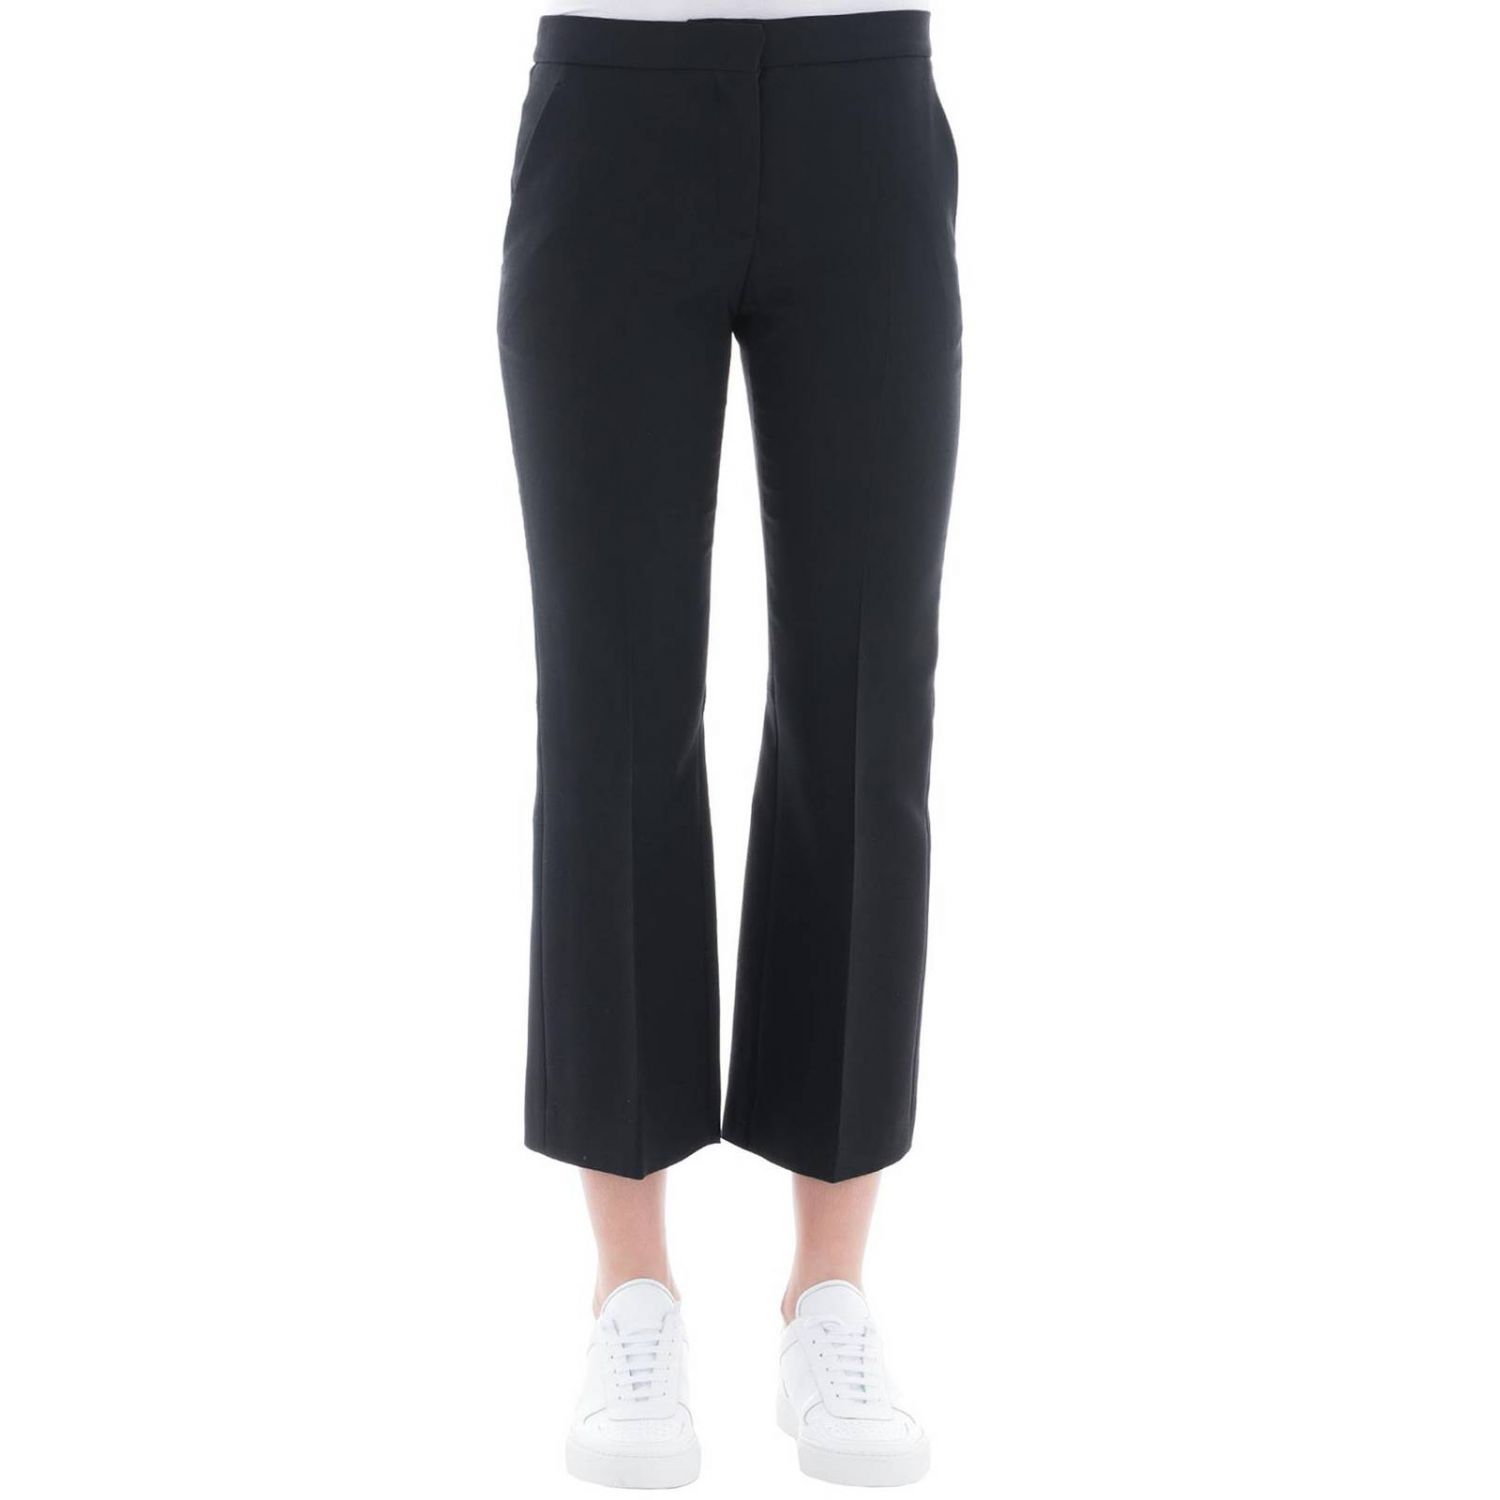 Mcq Outlet: pants for woman - Black | Mcq pants 517857 QLJ09 online on ...